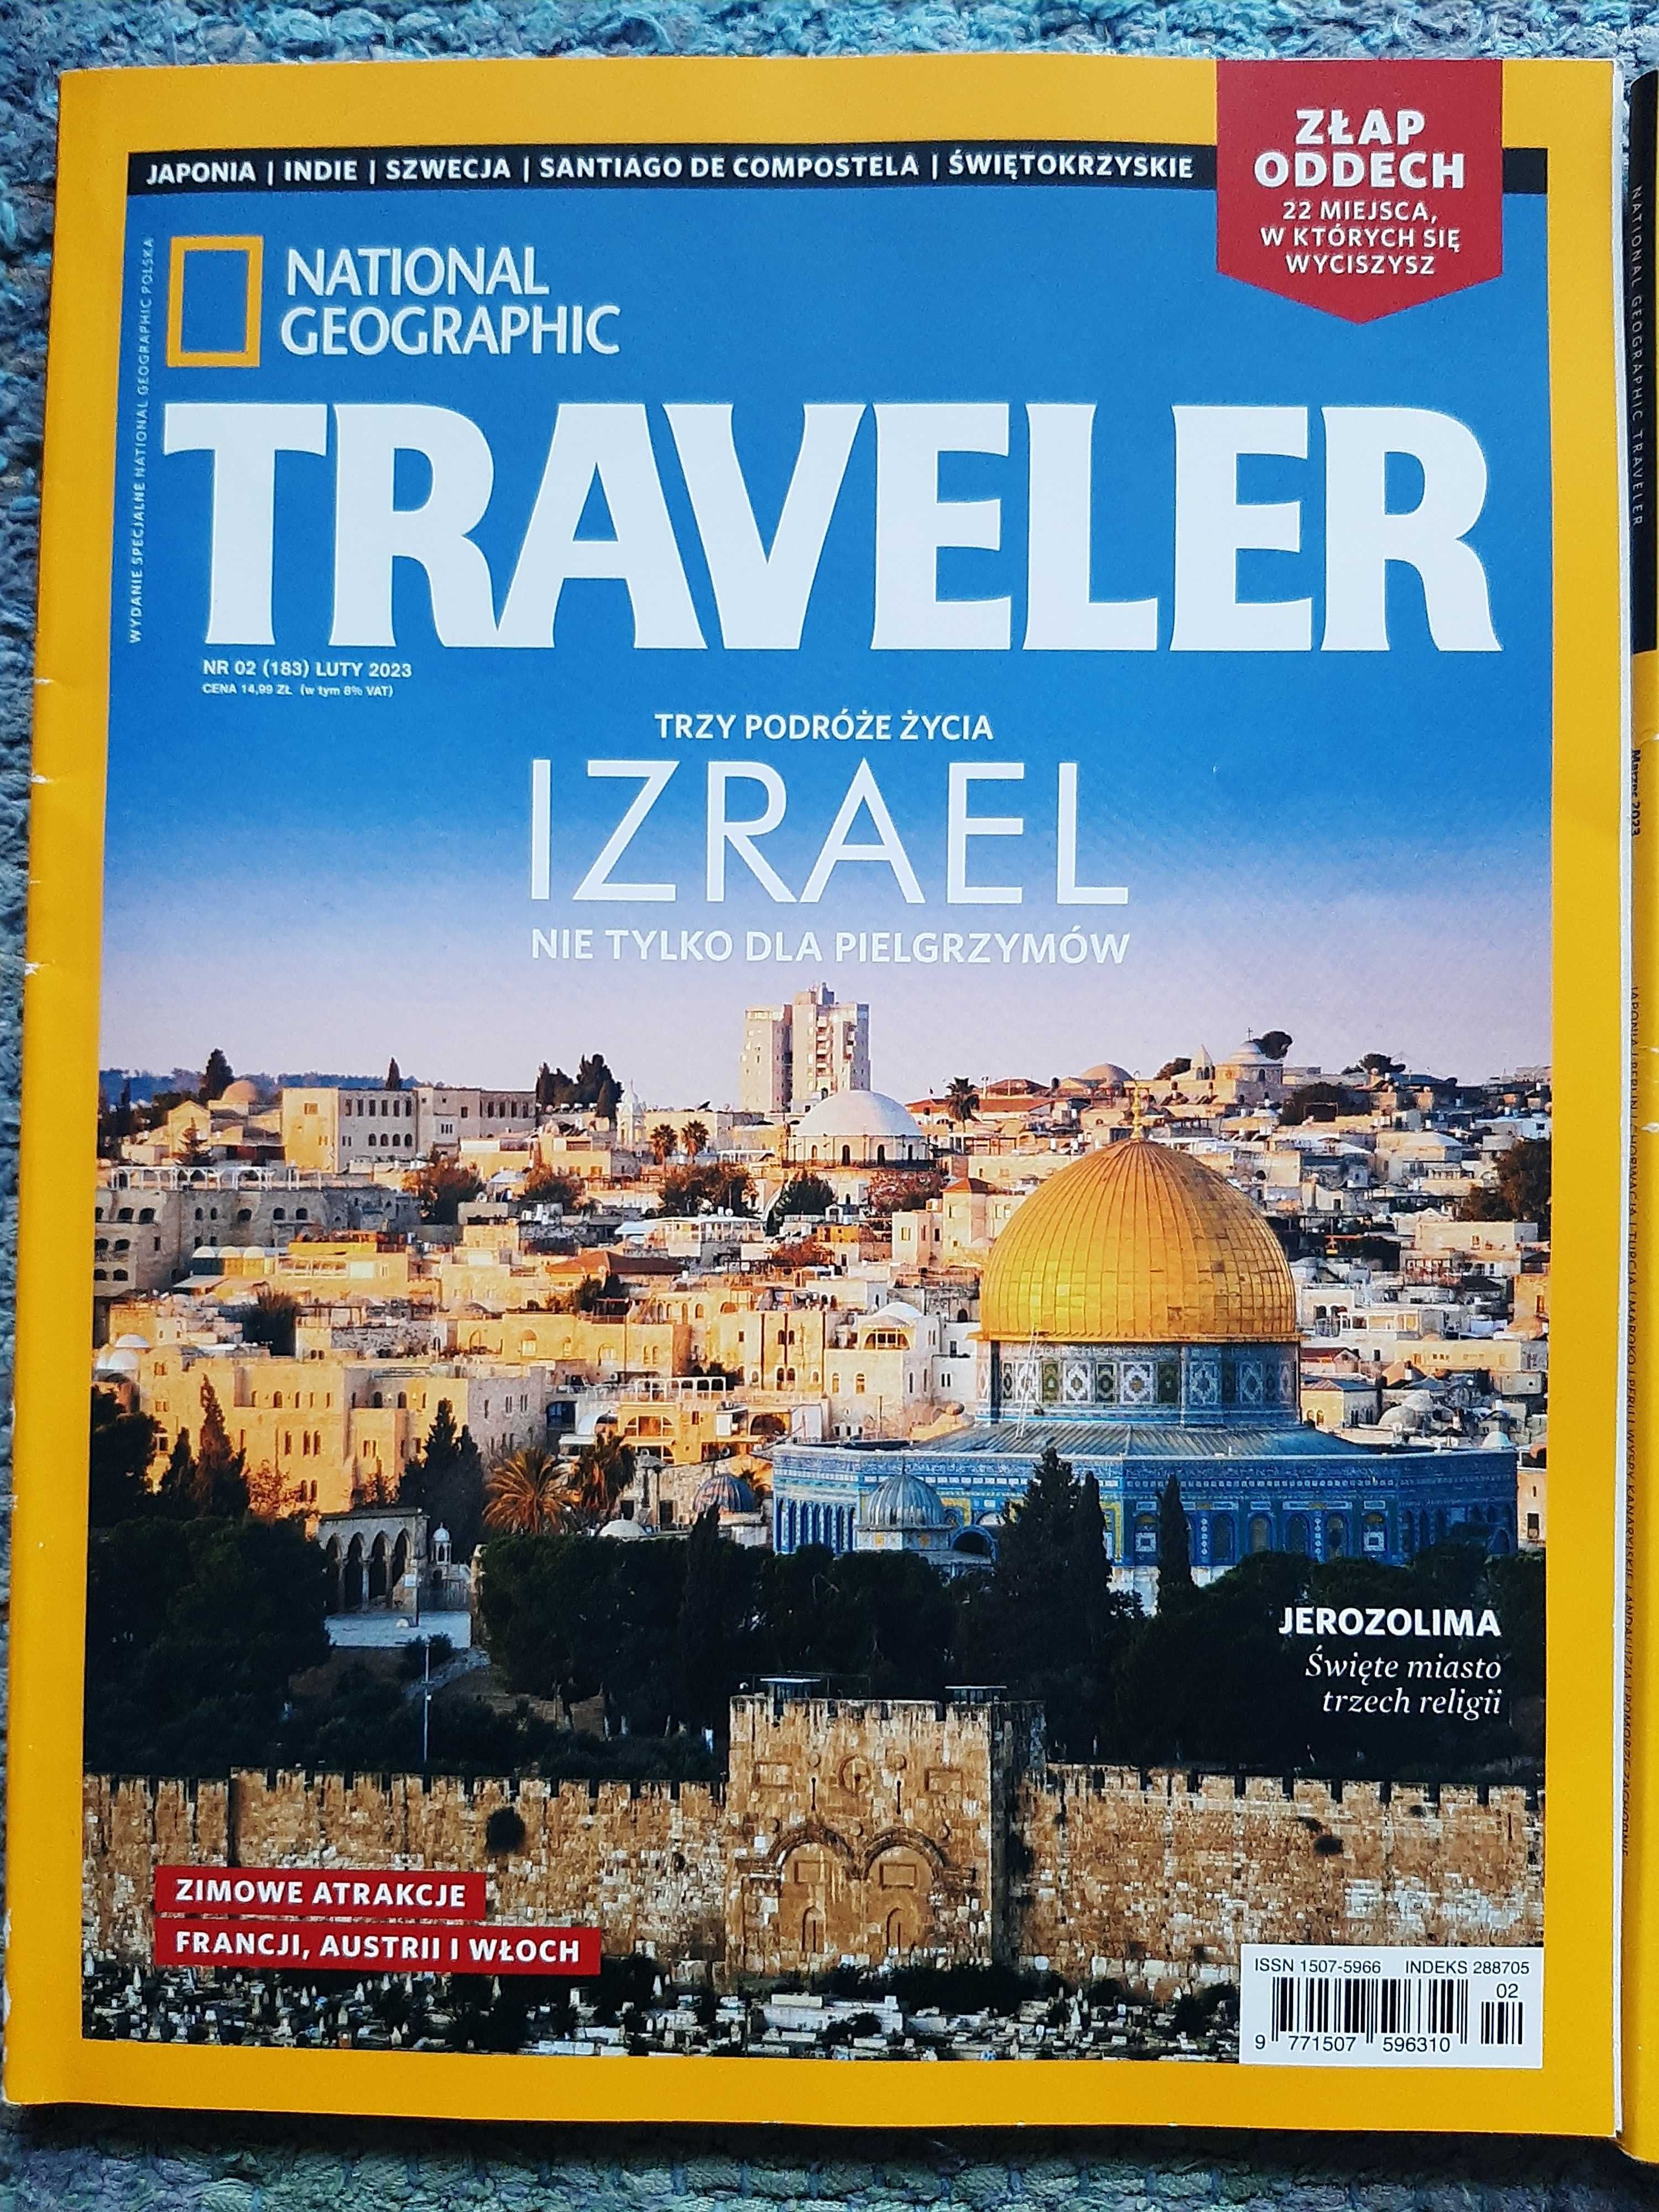 "Traveler" numer z 2023r. "Izrael"